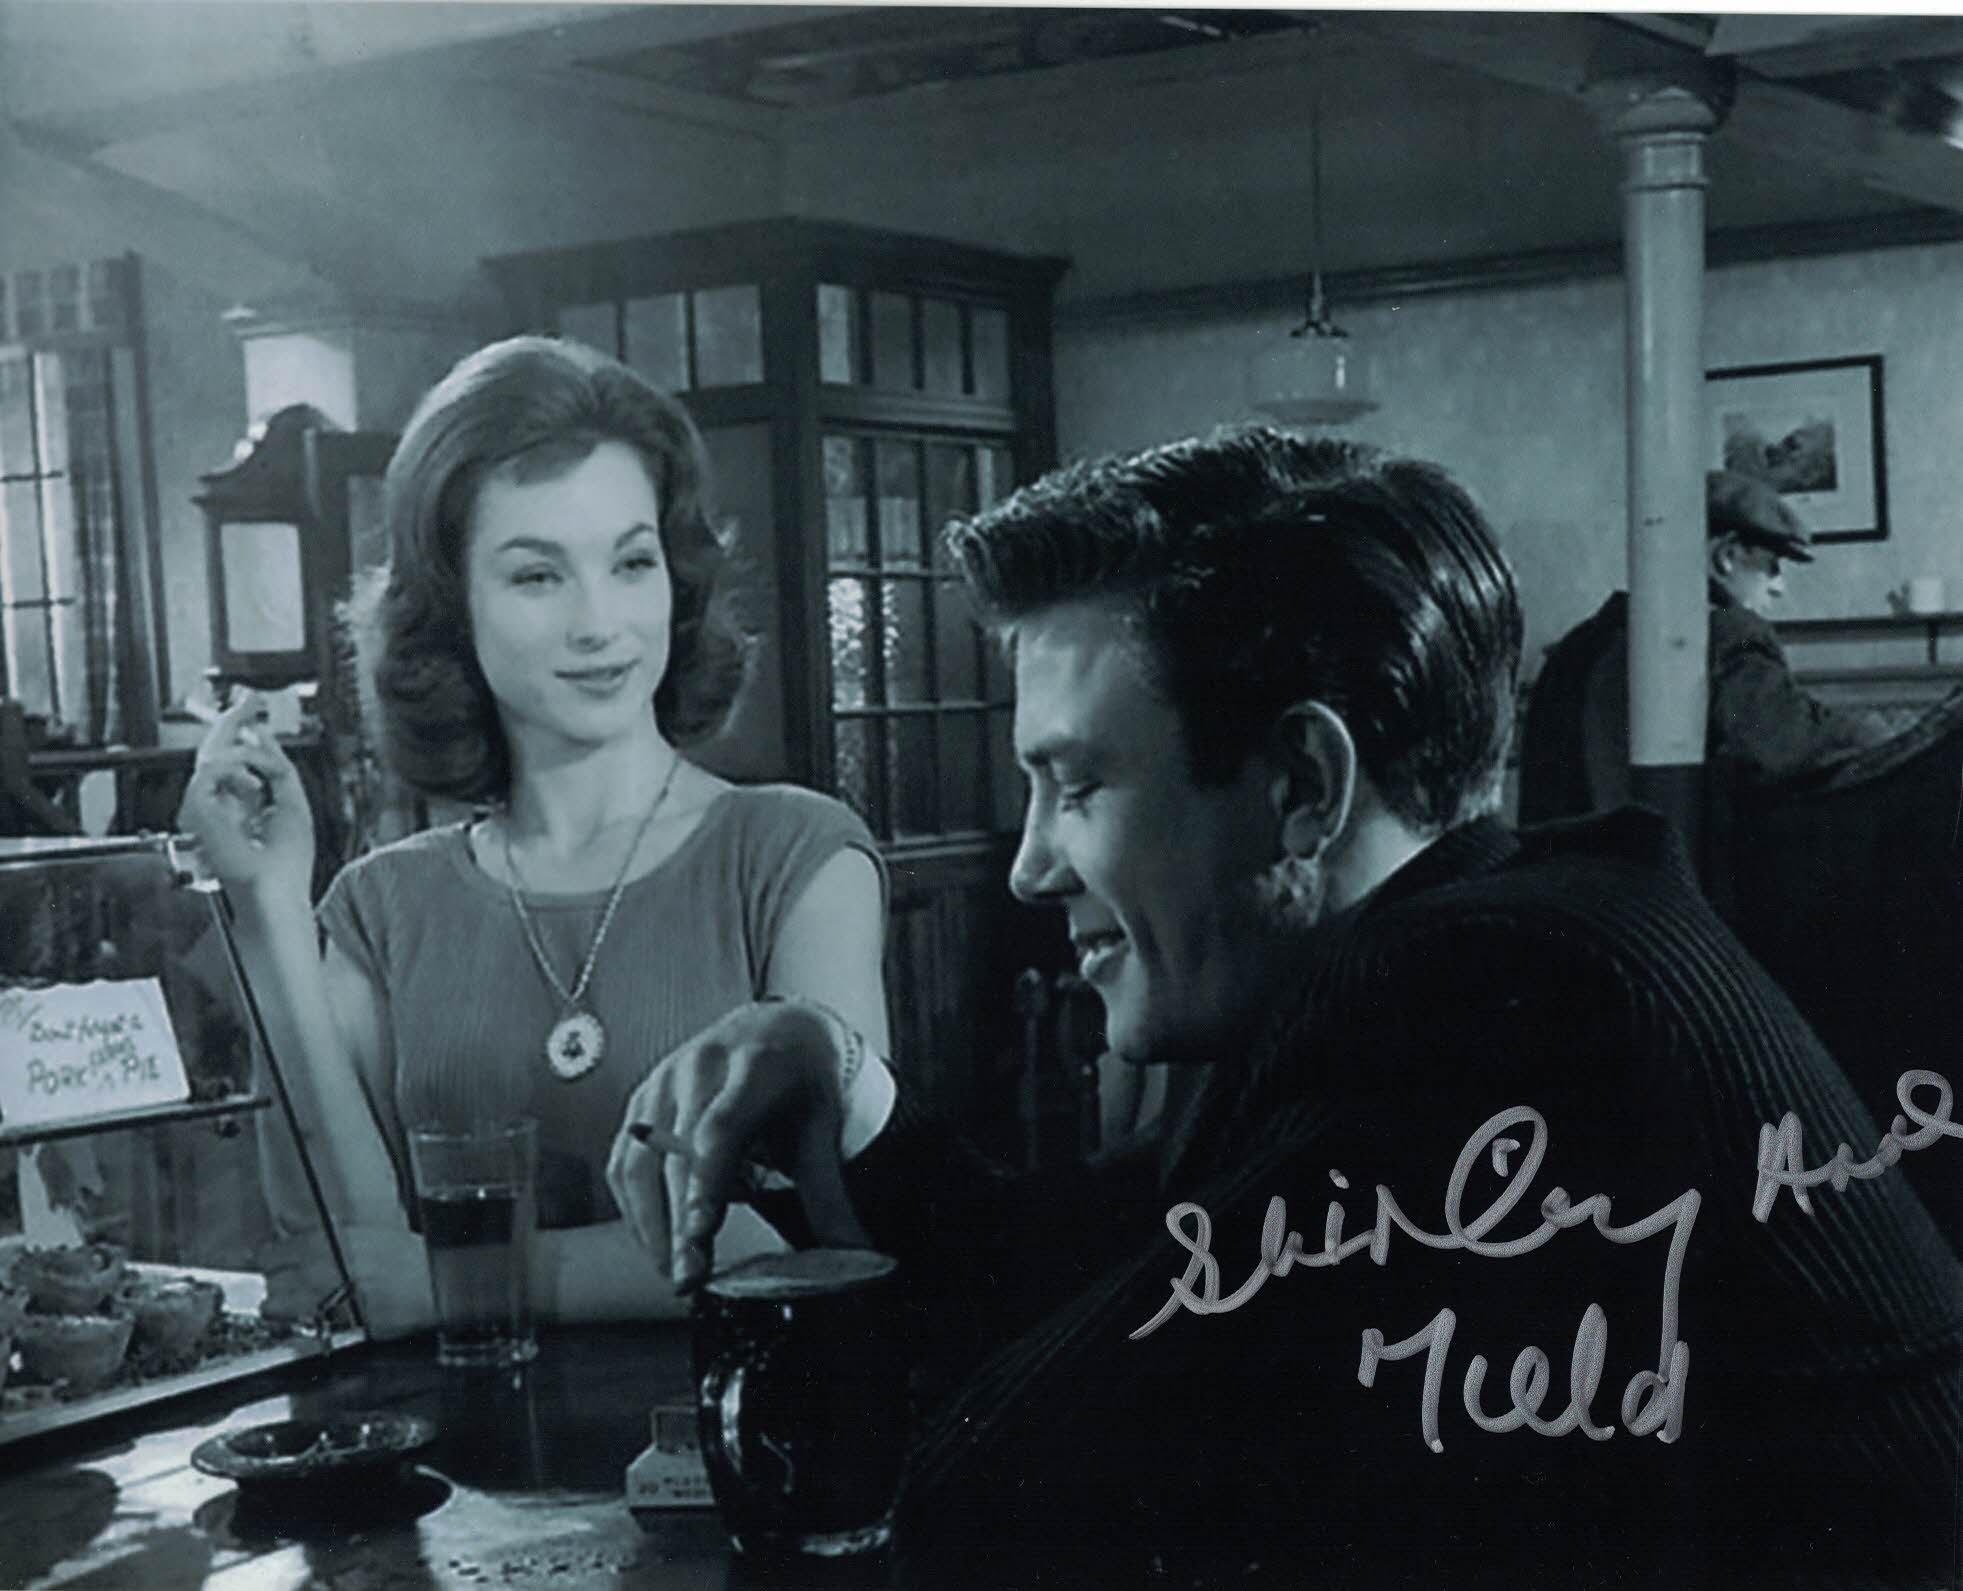 SHIRLEY ANNE FIELD - Saturday Night, Sunday morning, hand signed 10 x 8 photo